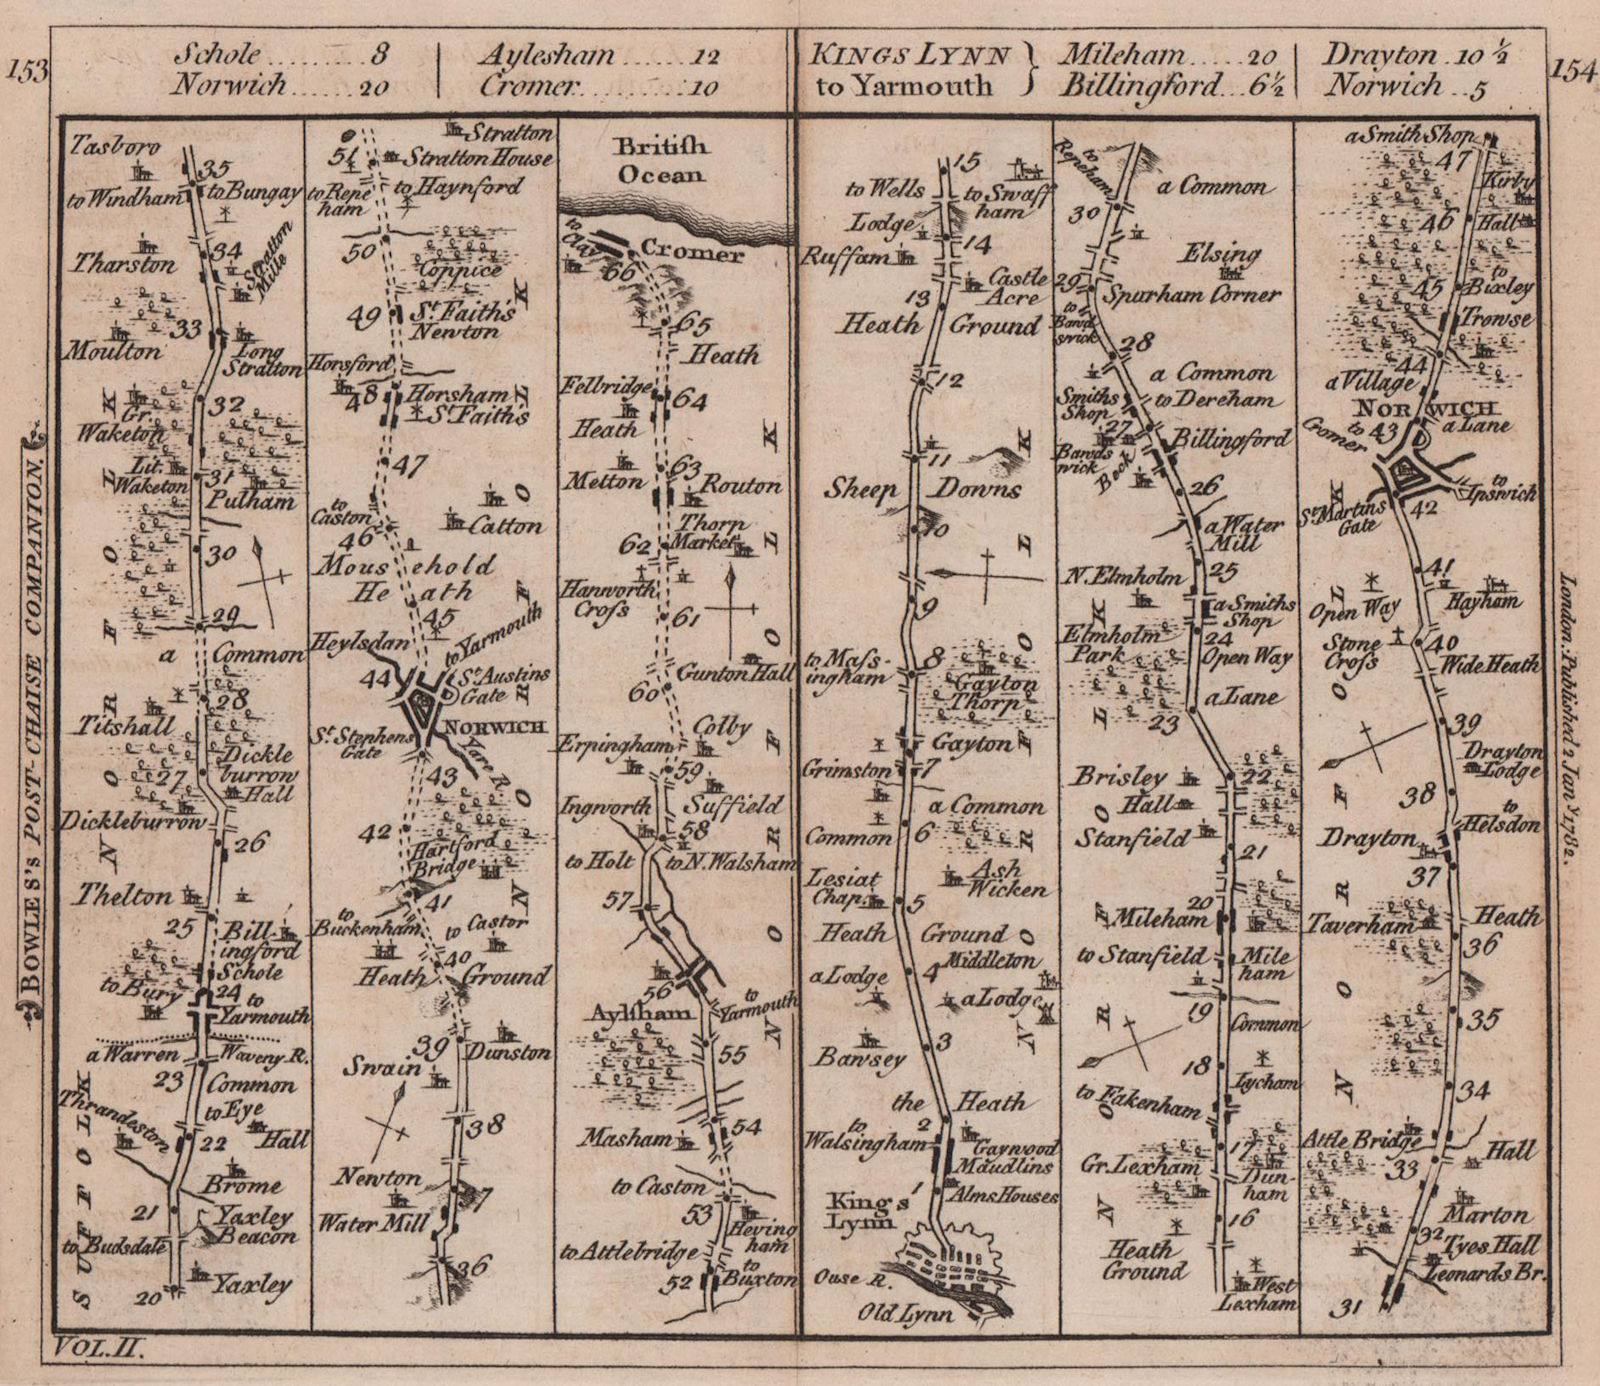 Associate Product Scole-Norwich-Cromer. King's Lynn-Drayton-Norwich road strip map BOWLES 1782